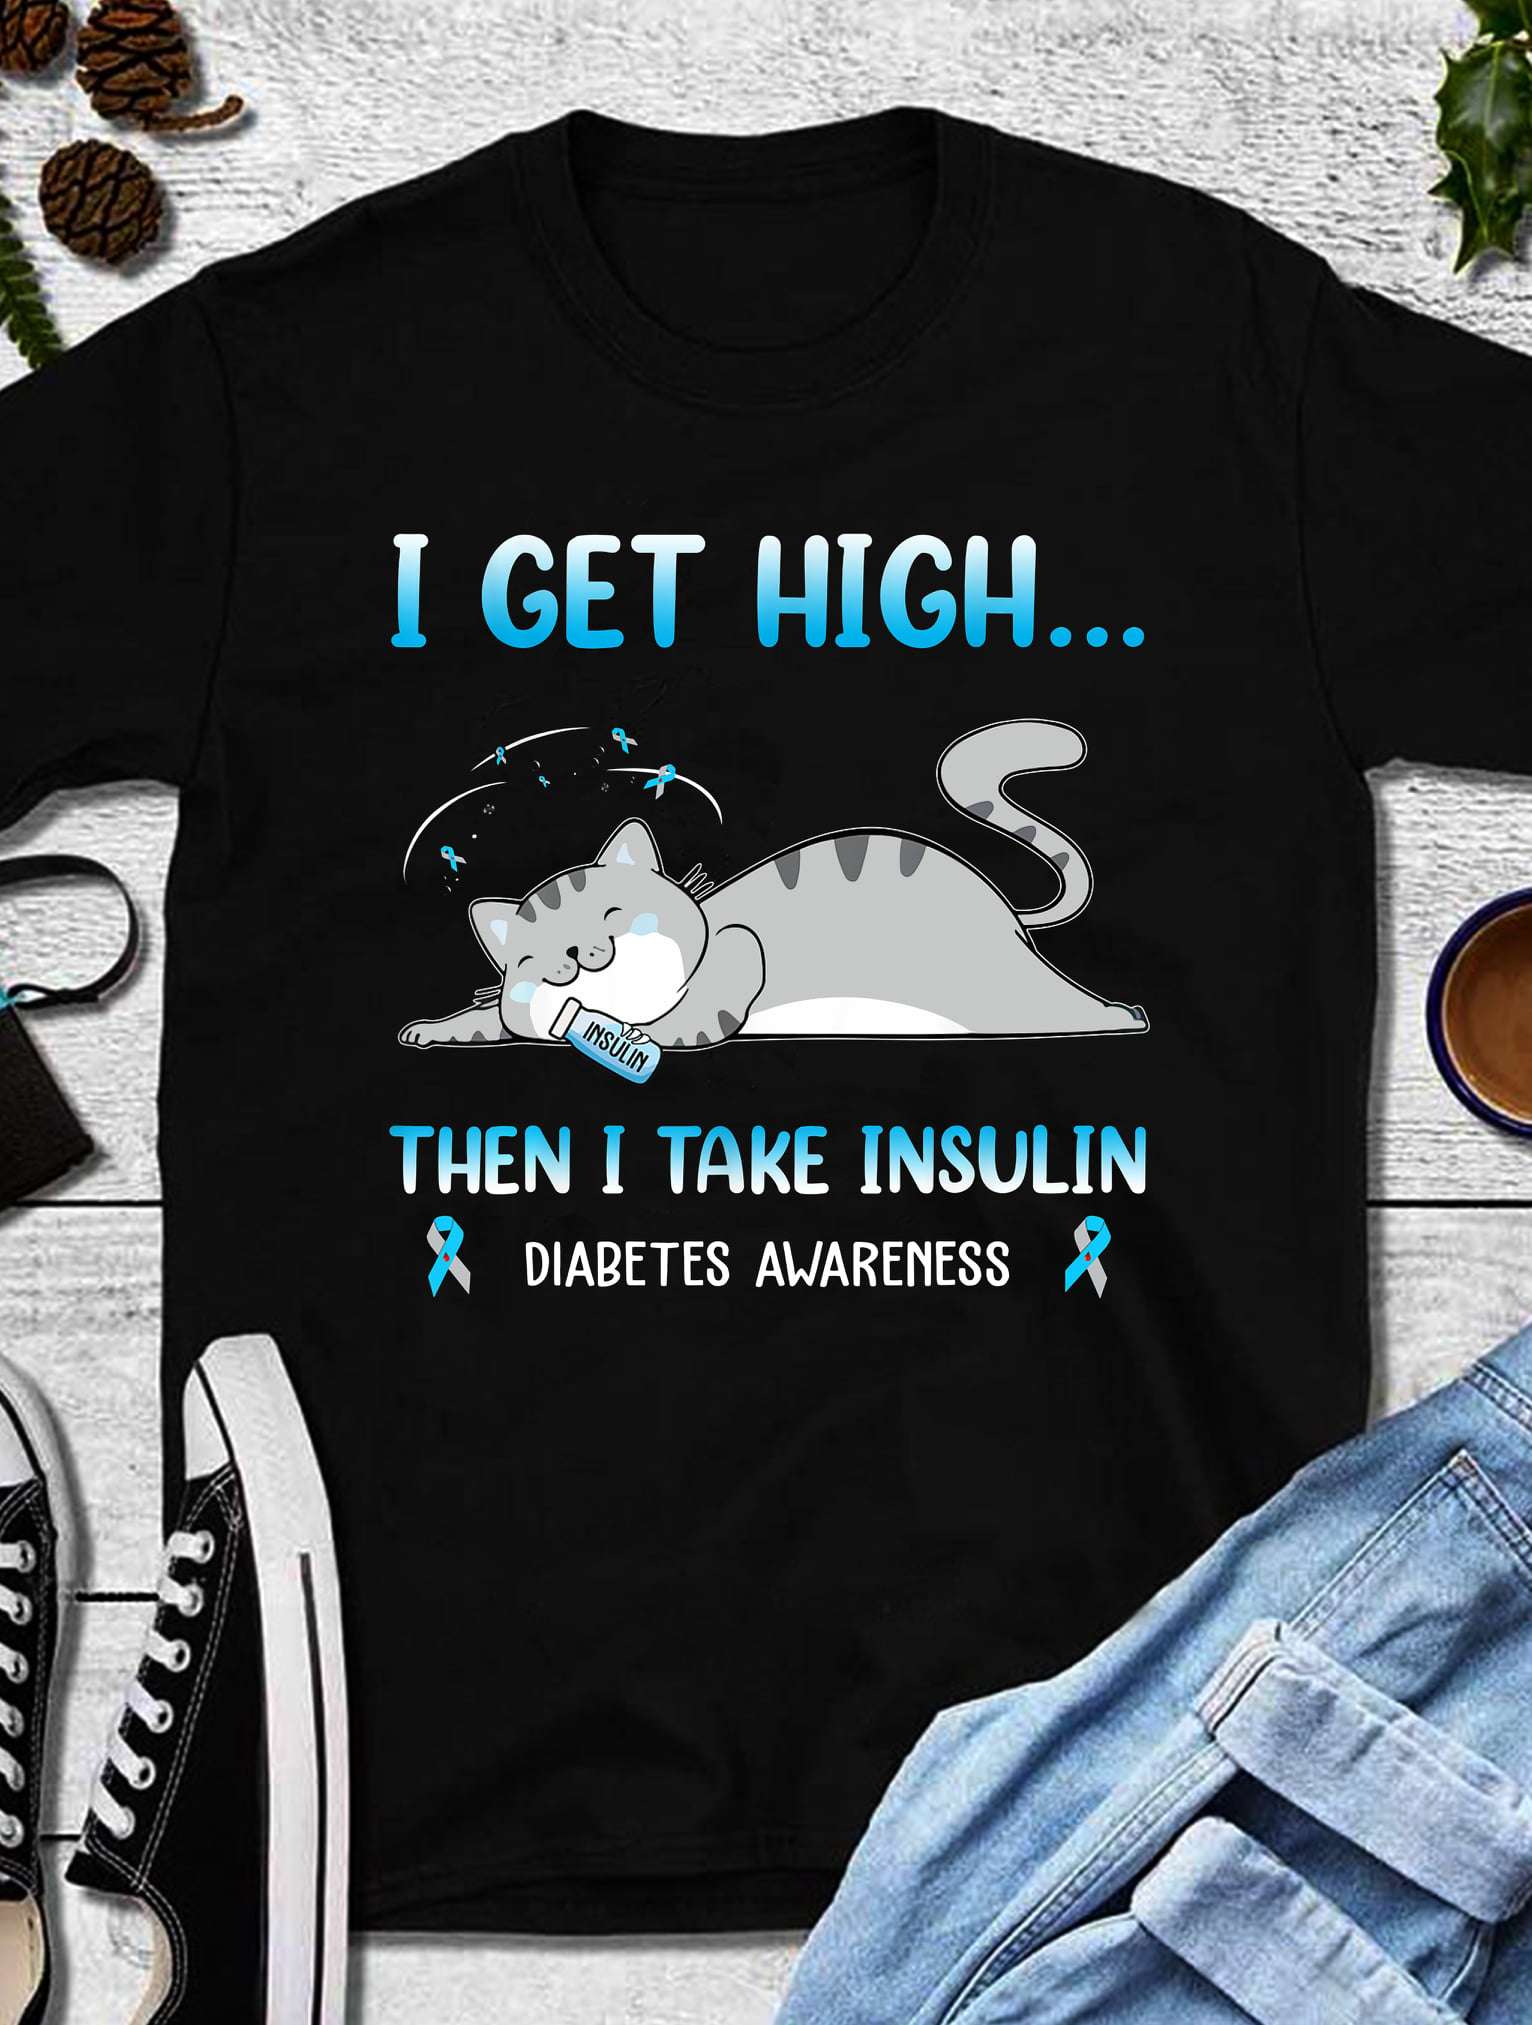 Diabetes Cat, Cat Need Insulin - I get high then i take insulin diabetes awareness